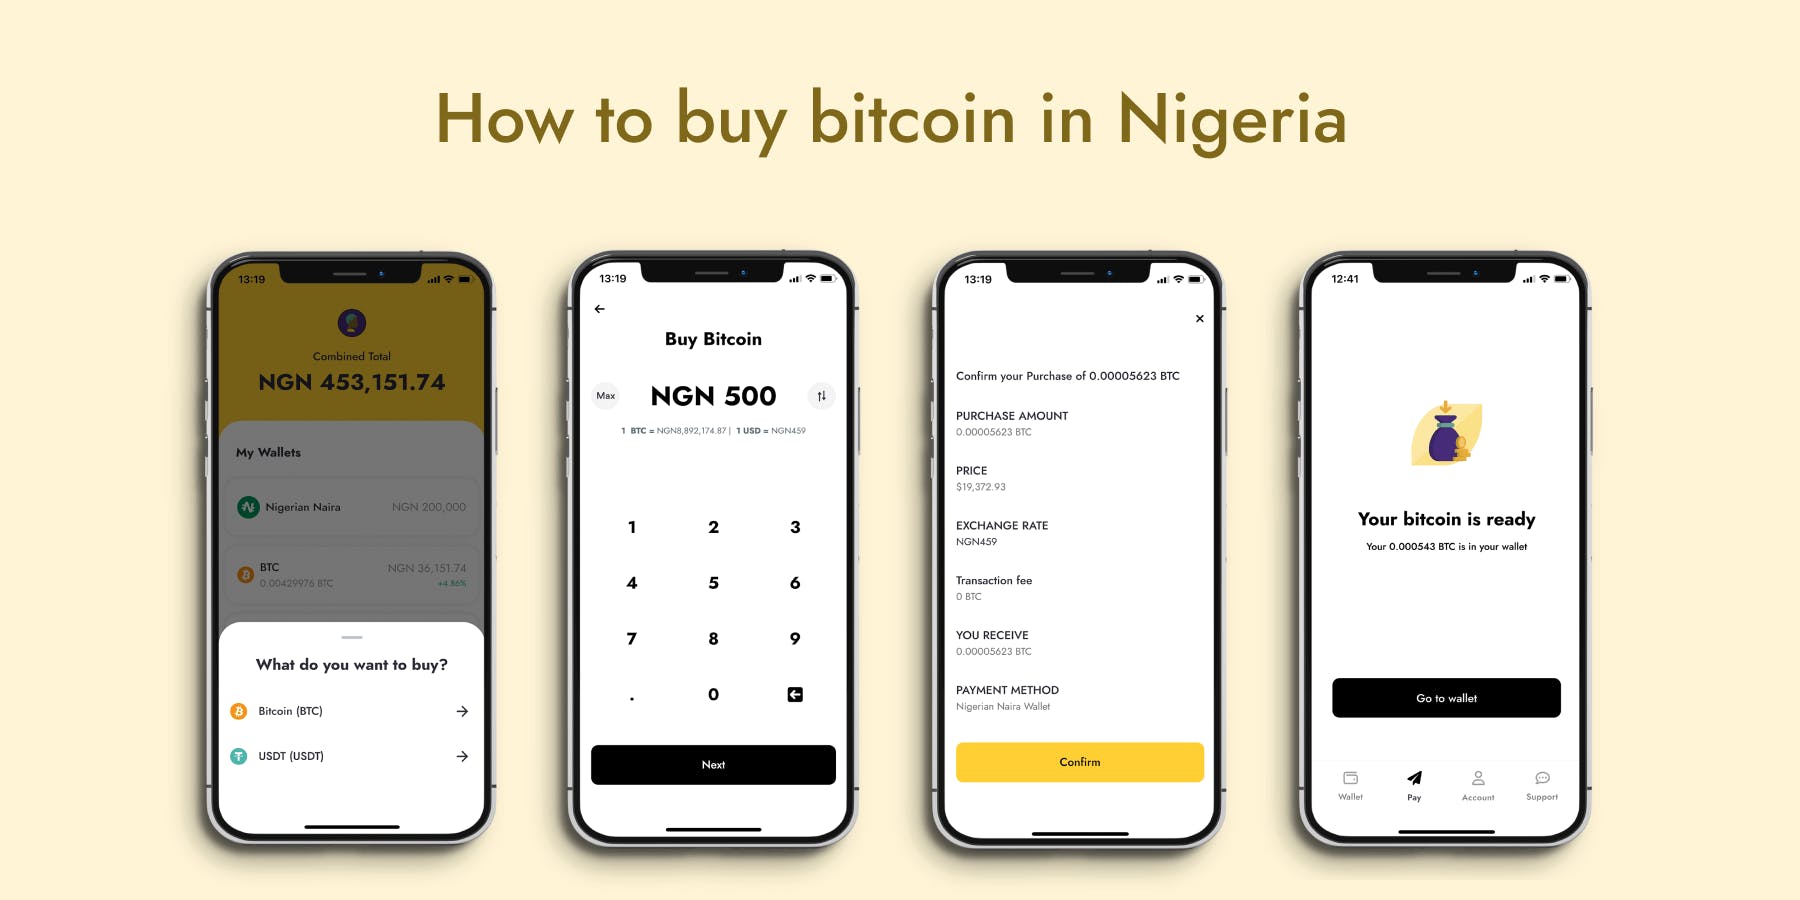 i want to buy bitcoin in nigeria